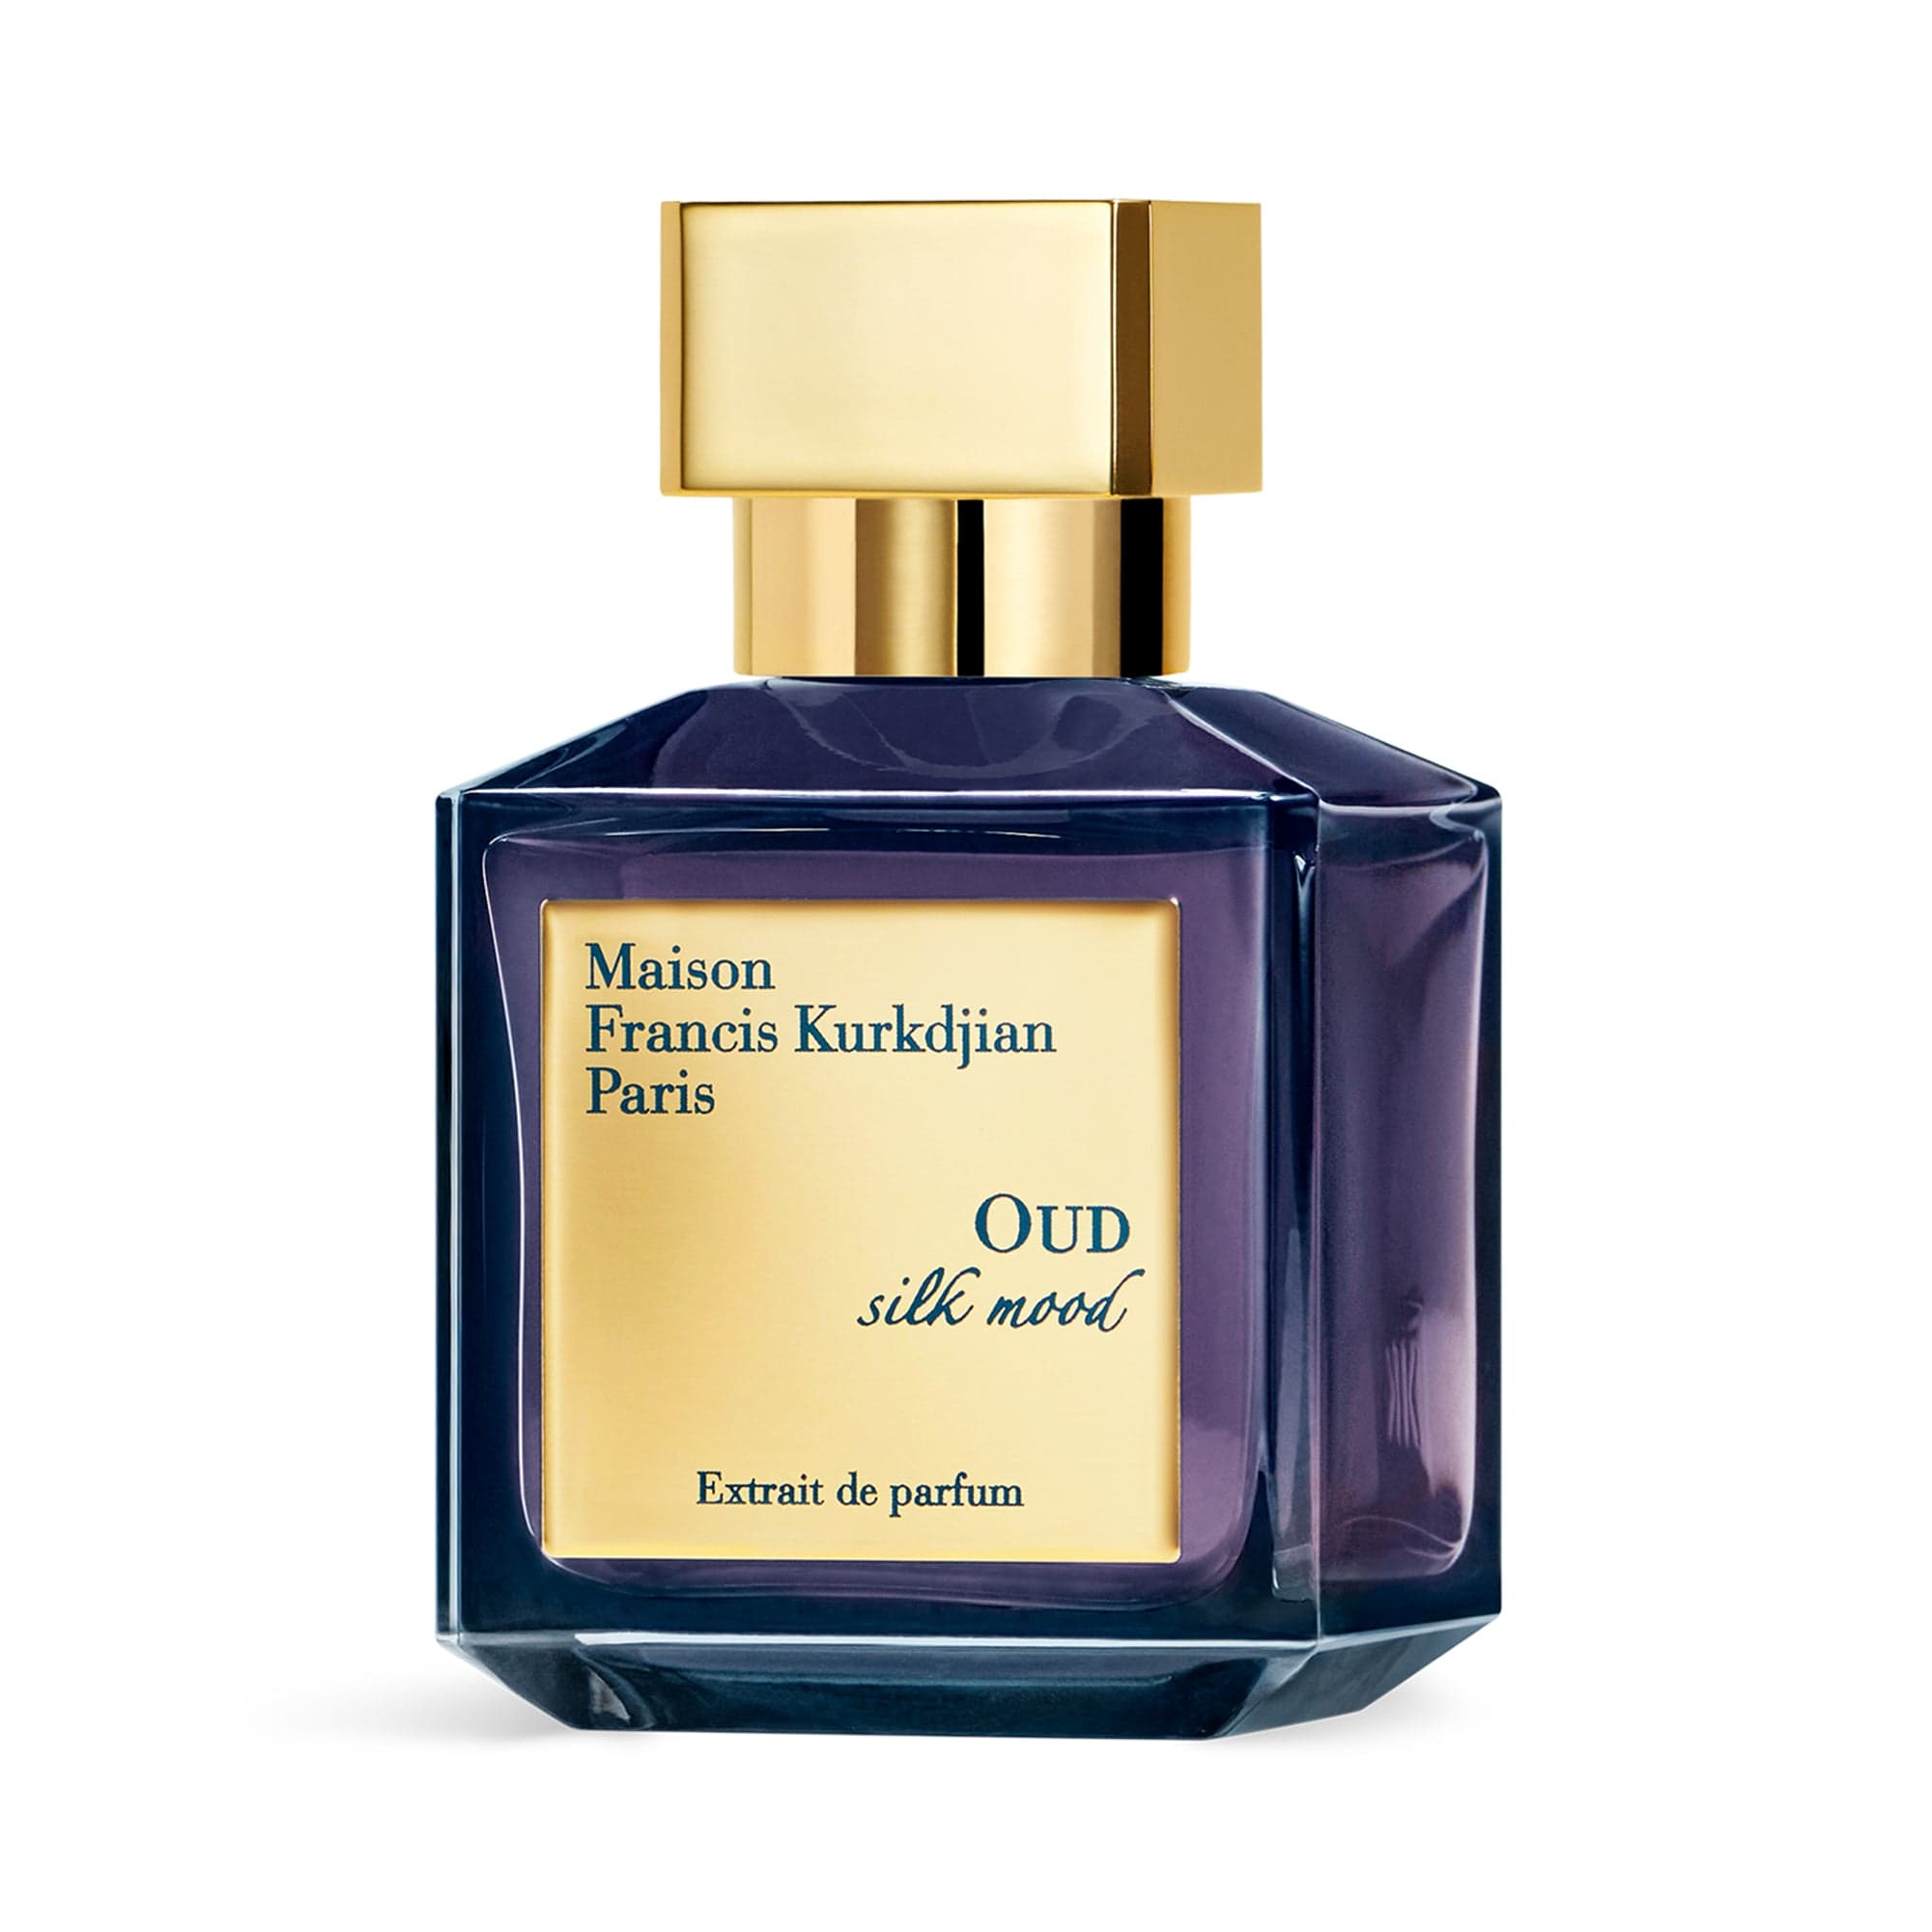 OUD Silk Mood de Maison Francis Kurkdjian Extracto de Perfume